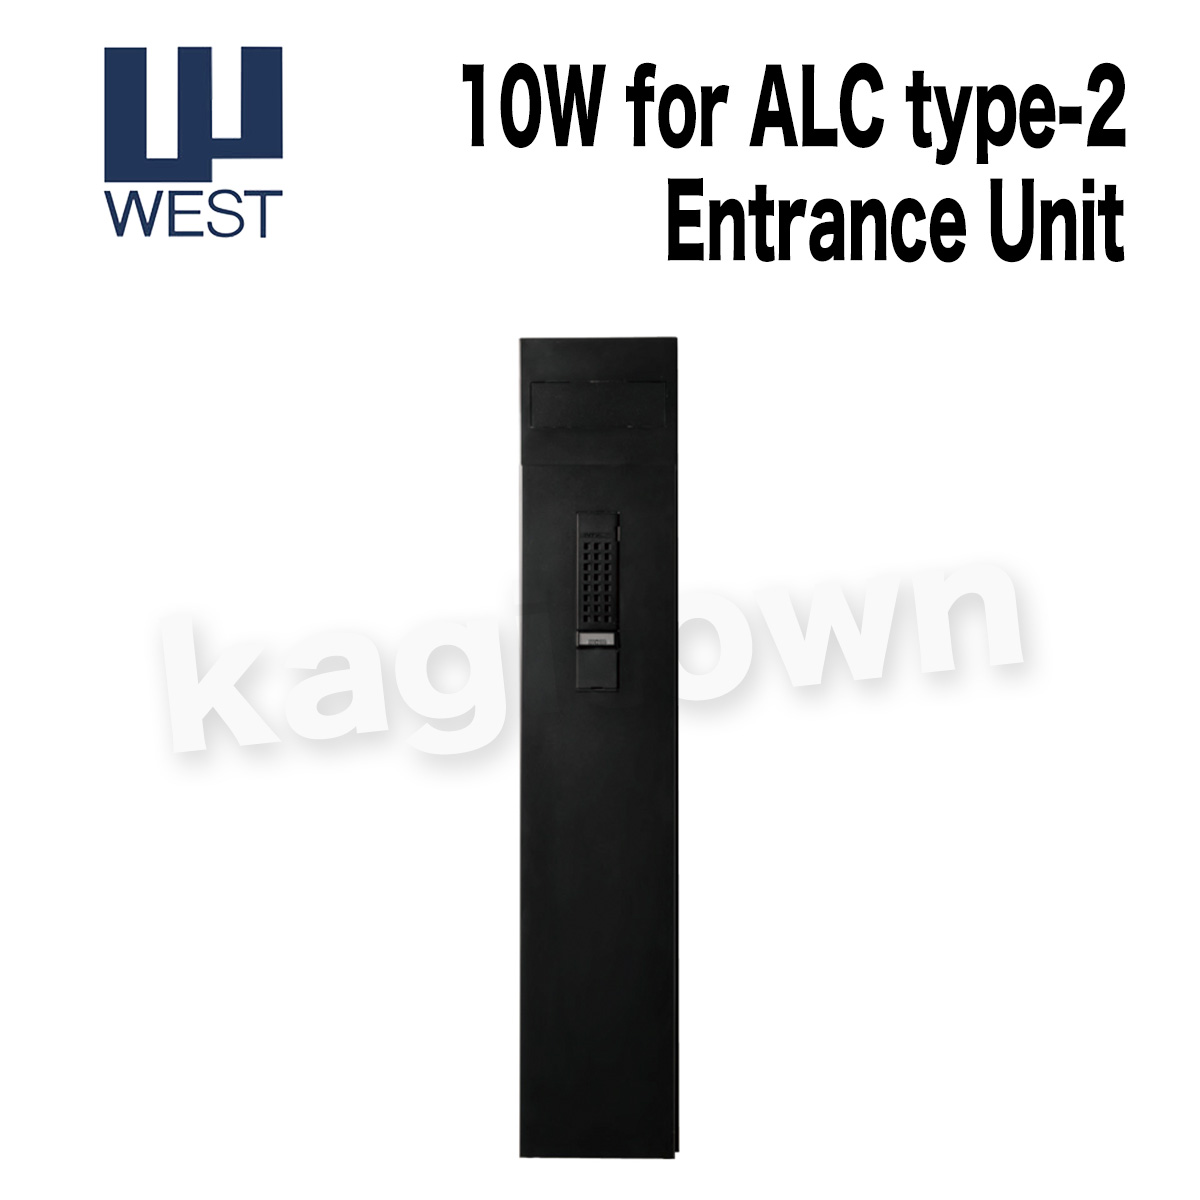 WEST 【ウエスト】玄関ユニット[WEST-10W type2]10W for ALC Entrance Unit パネルのみインターホン付属なし